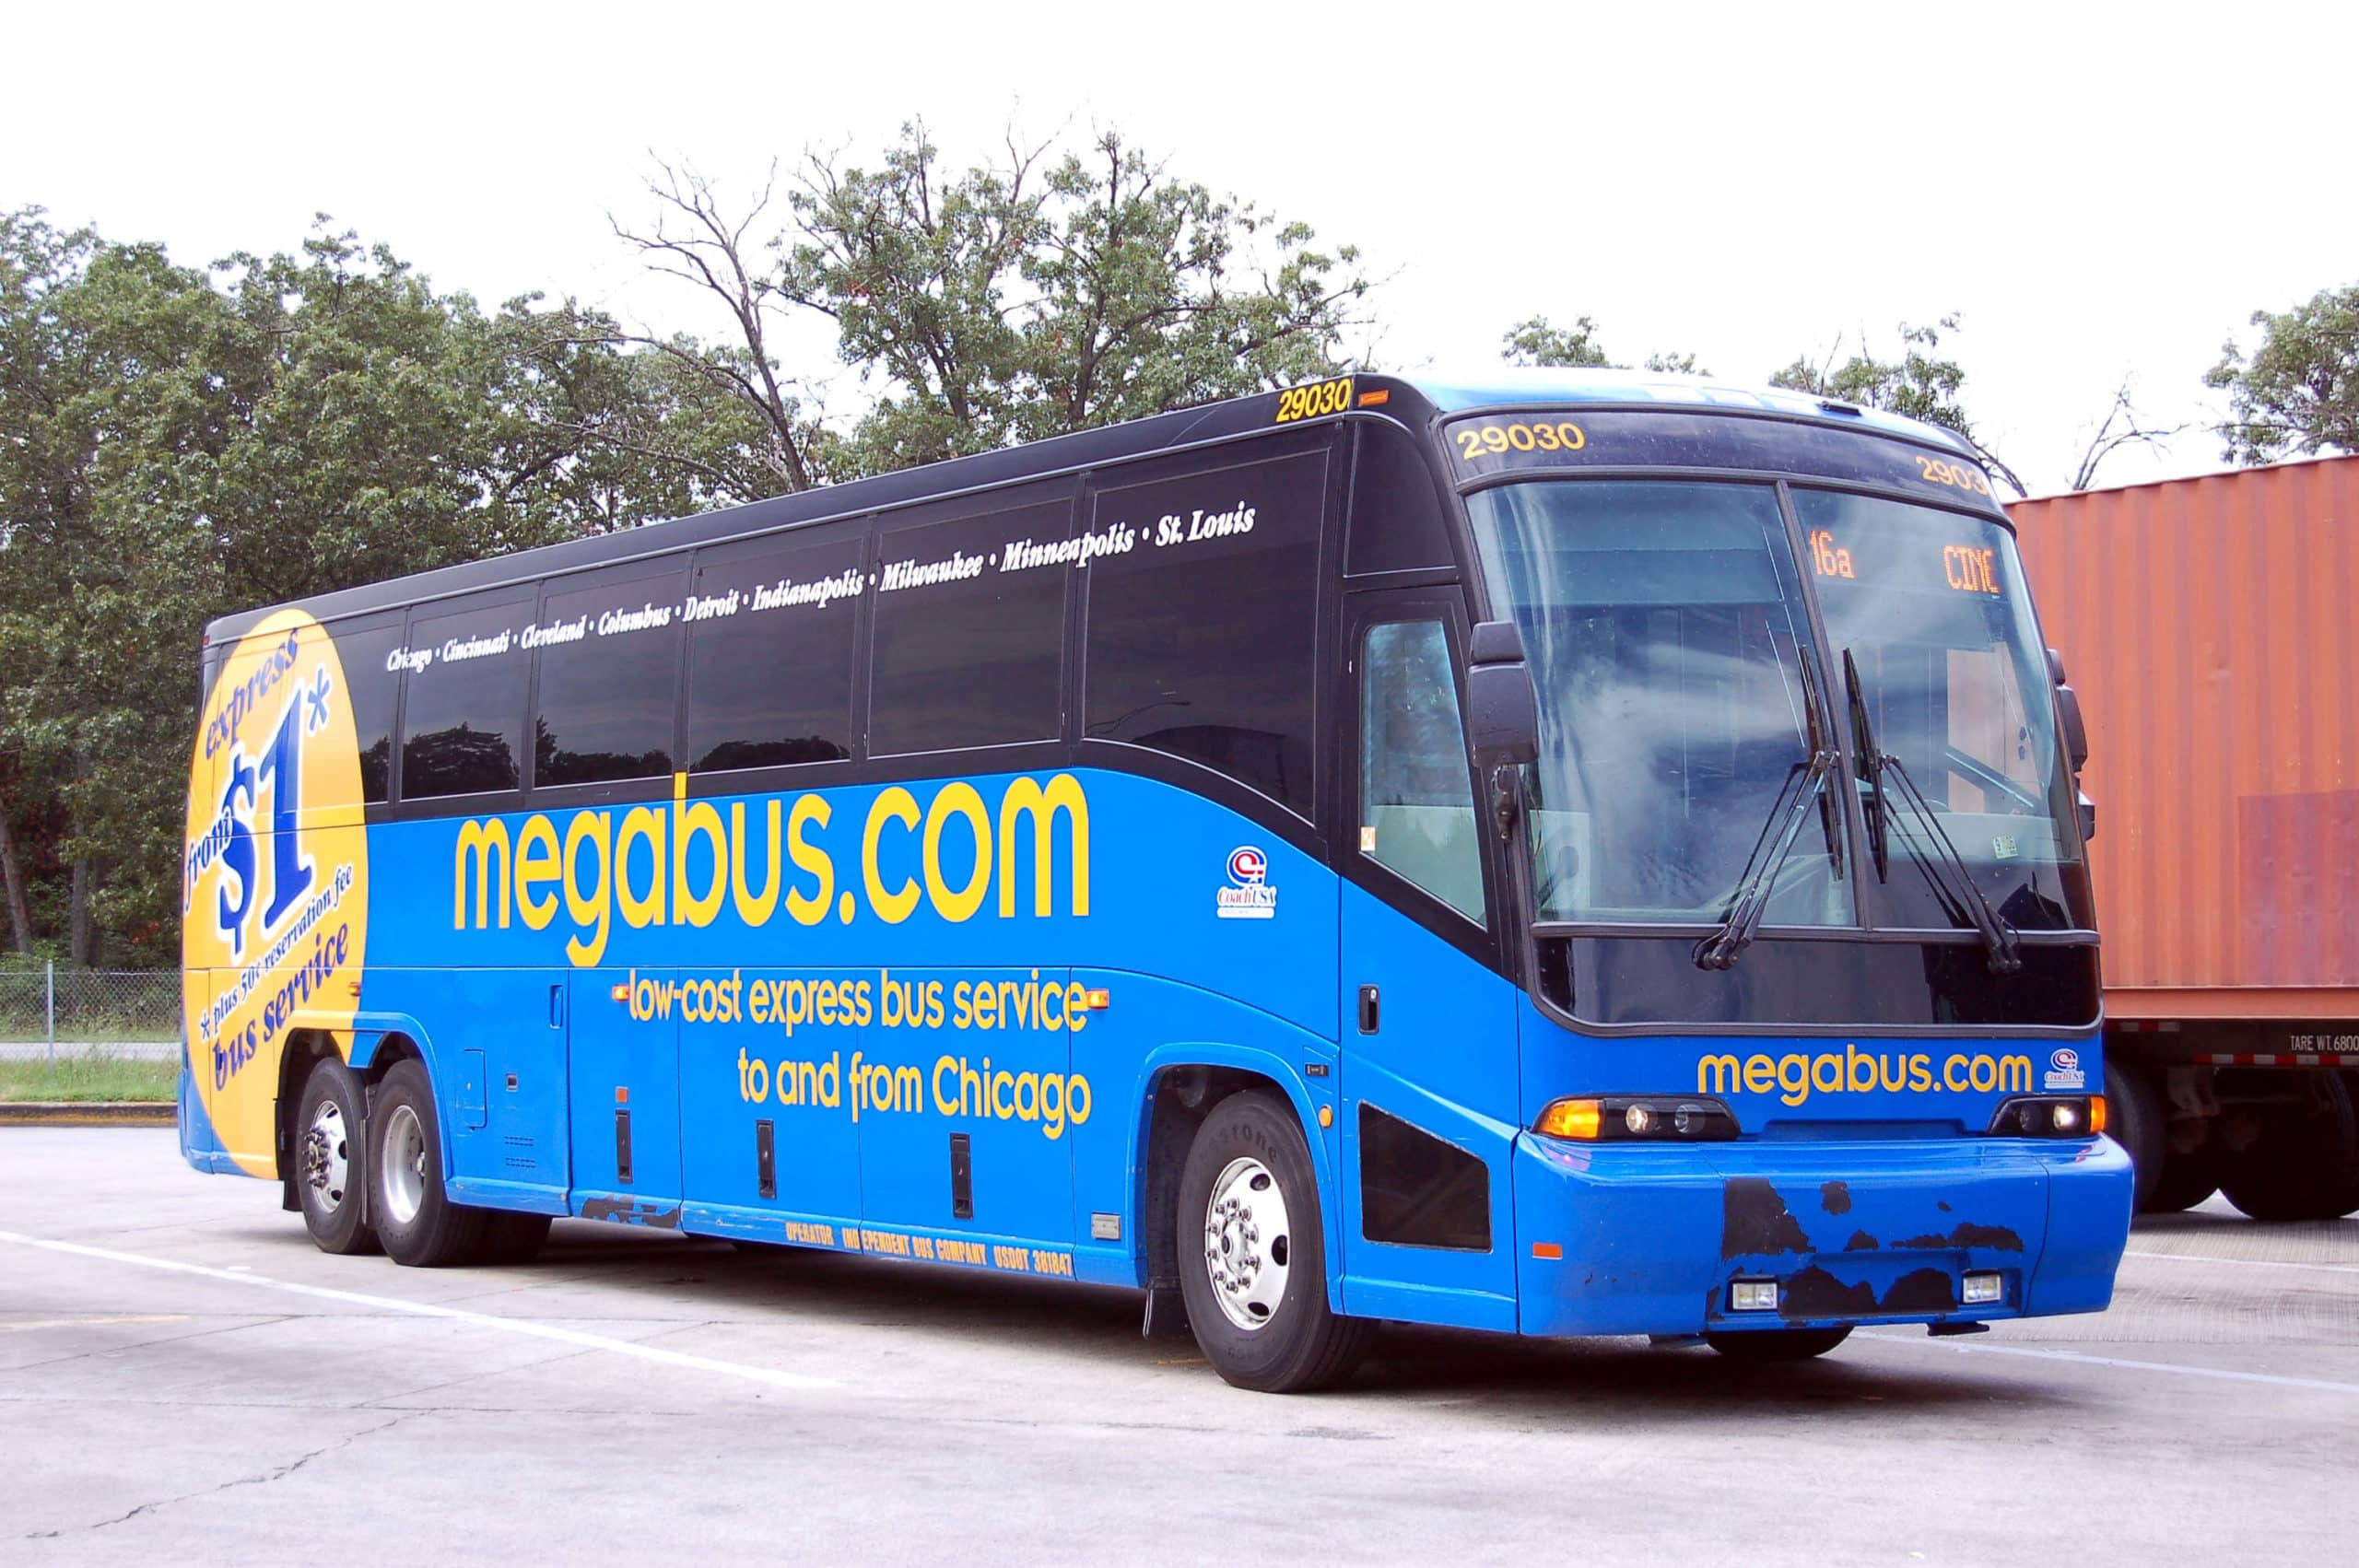 megabus safety tips, image